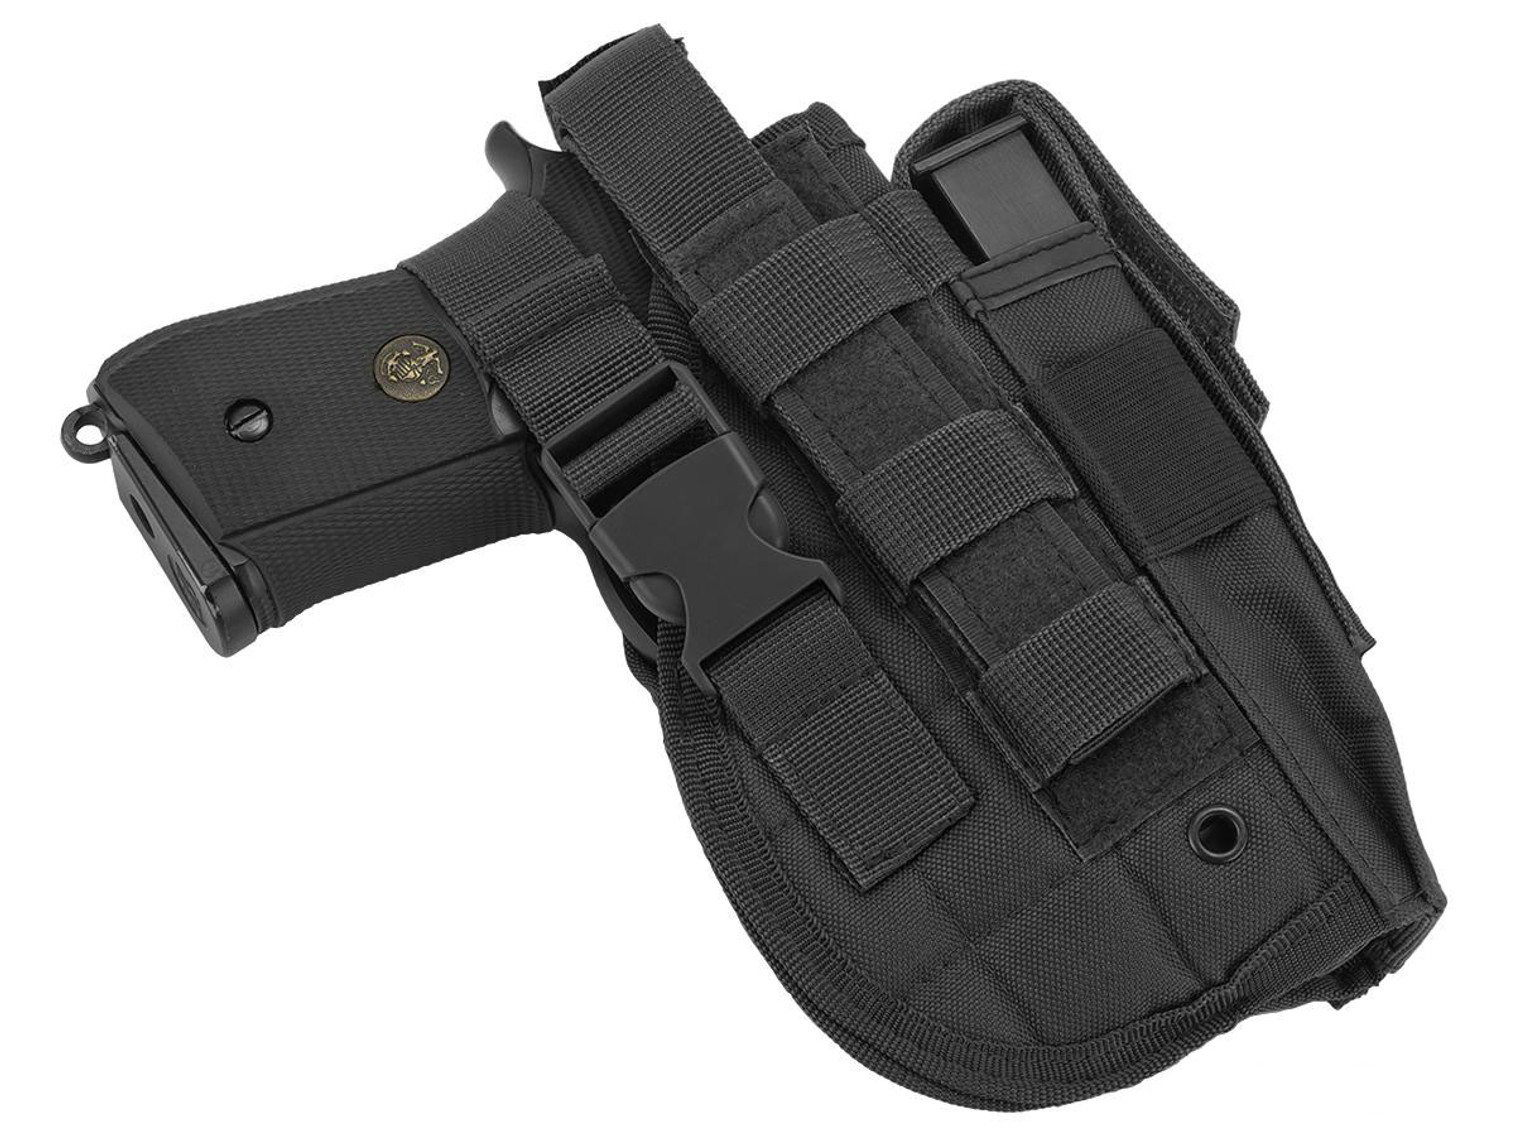 Matrix Universal MOLLE / Belt Mount Holster for Handguns pistols (Color: Black)